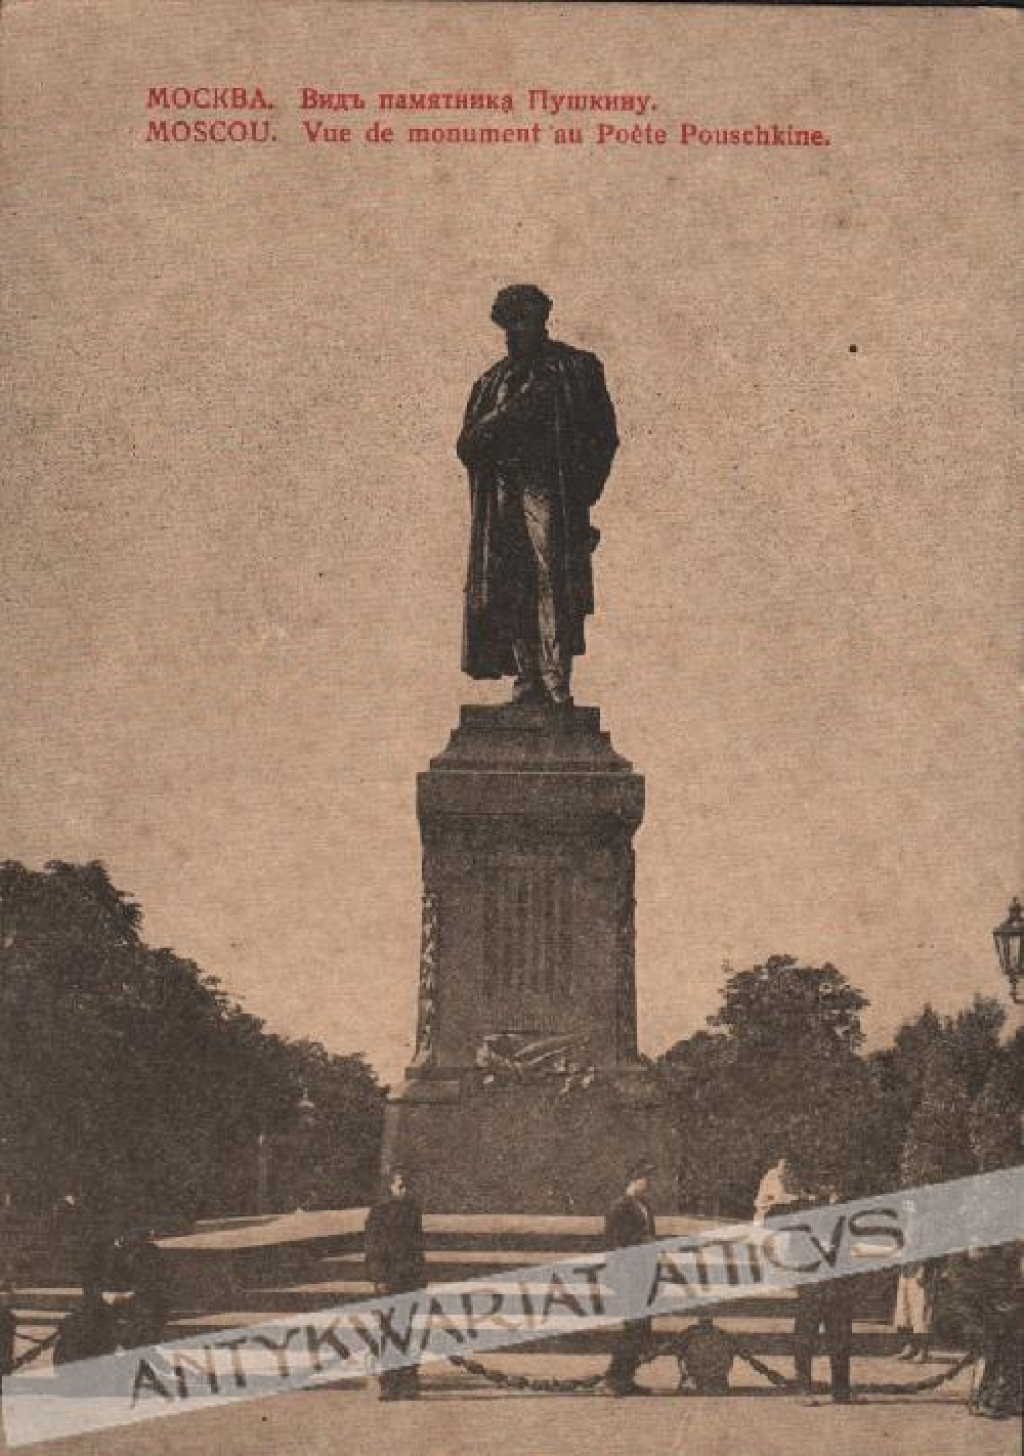 [pocztówka] Moscou. Vue de monument au Poete Pouschkine. [Moskwa. Pomnik Puszkina]